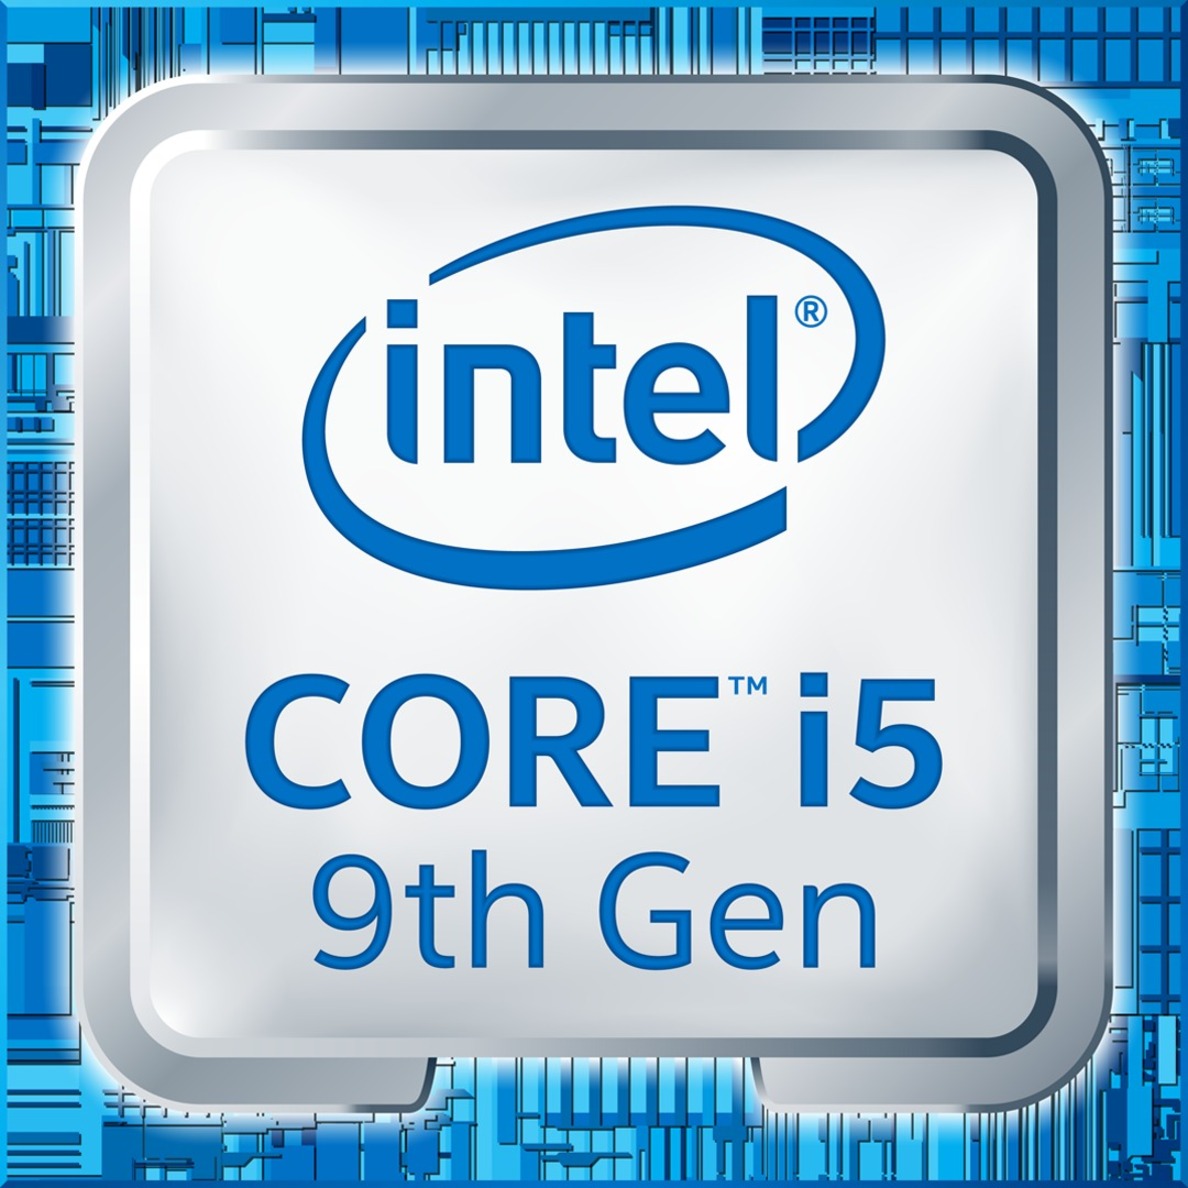 Intel CORE I5-9500 3.0GHZ 9MB LGA1151 6C/6T (BX80684I59500) Core i5 Hexa-core i5-9500 3GHz Desktop Processor